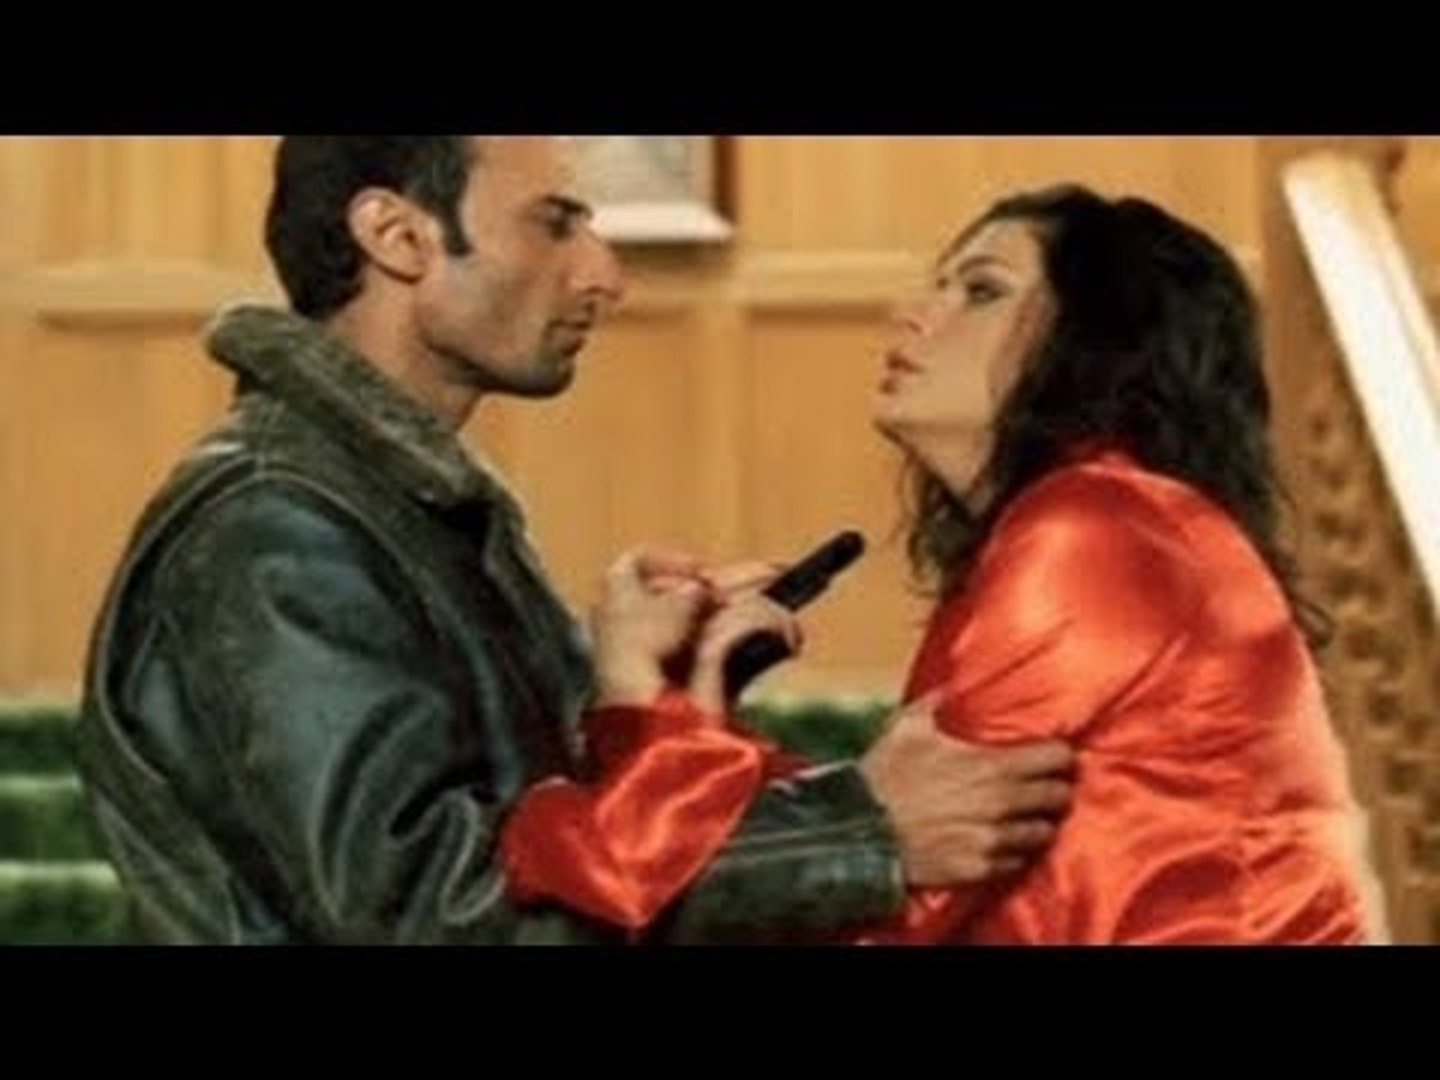 H0t DRUNK Russian GIRL SEDUCING Cape Karma Bollywood Sex Thriller photo